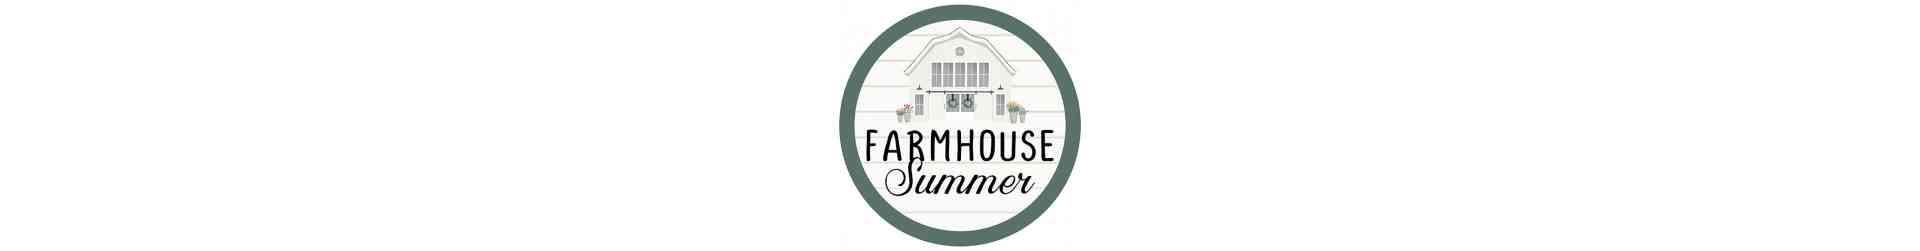 Farmhouse Summer